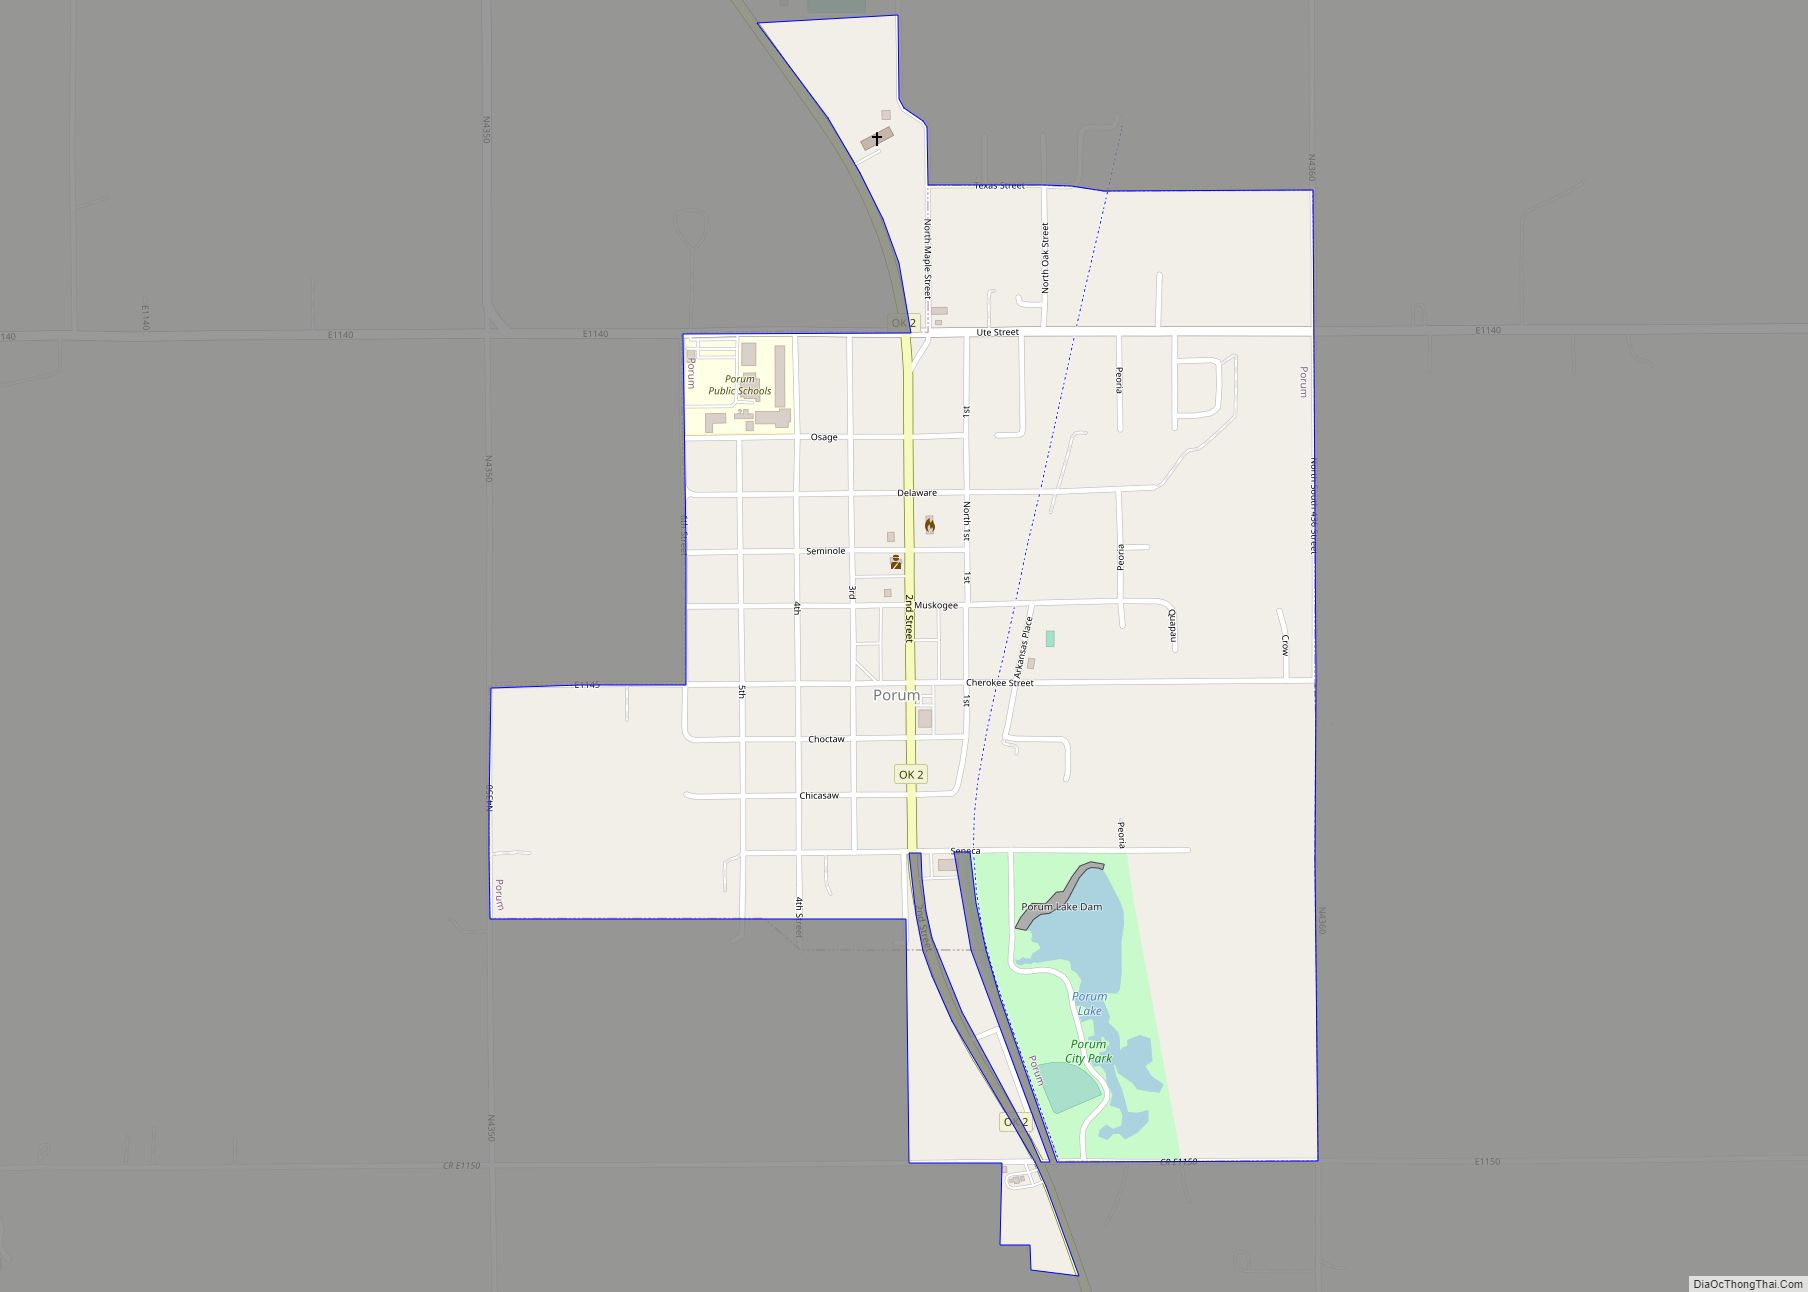 Map of Porum town